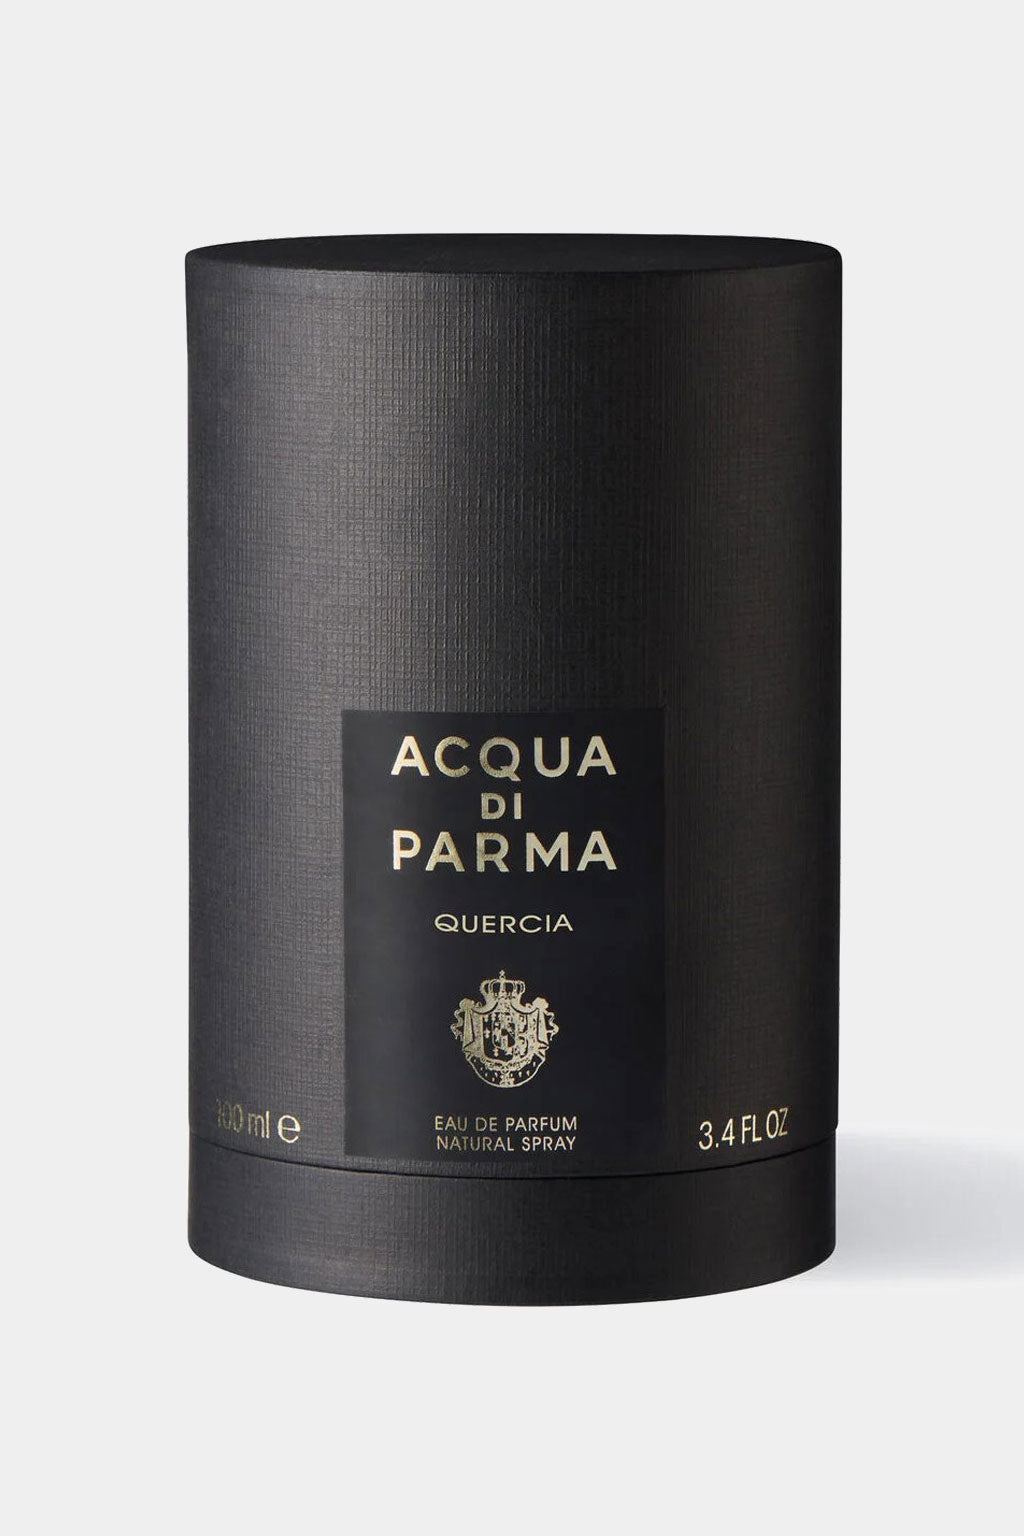 Acqua Di Parma - Quercia Eau de Parfum